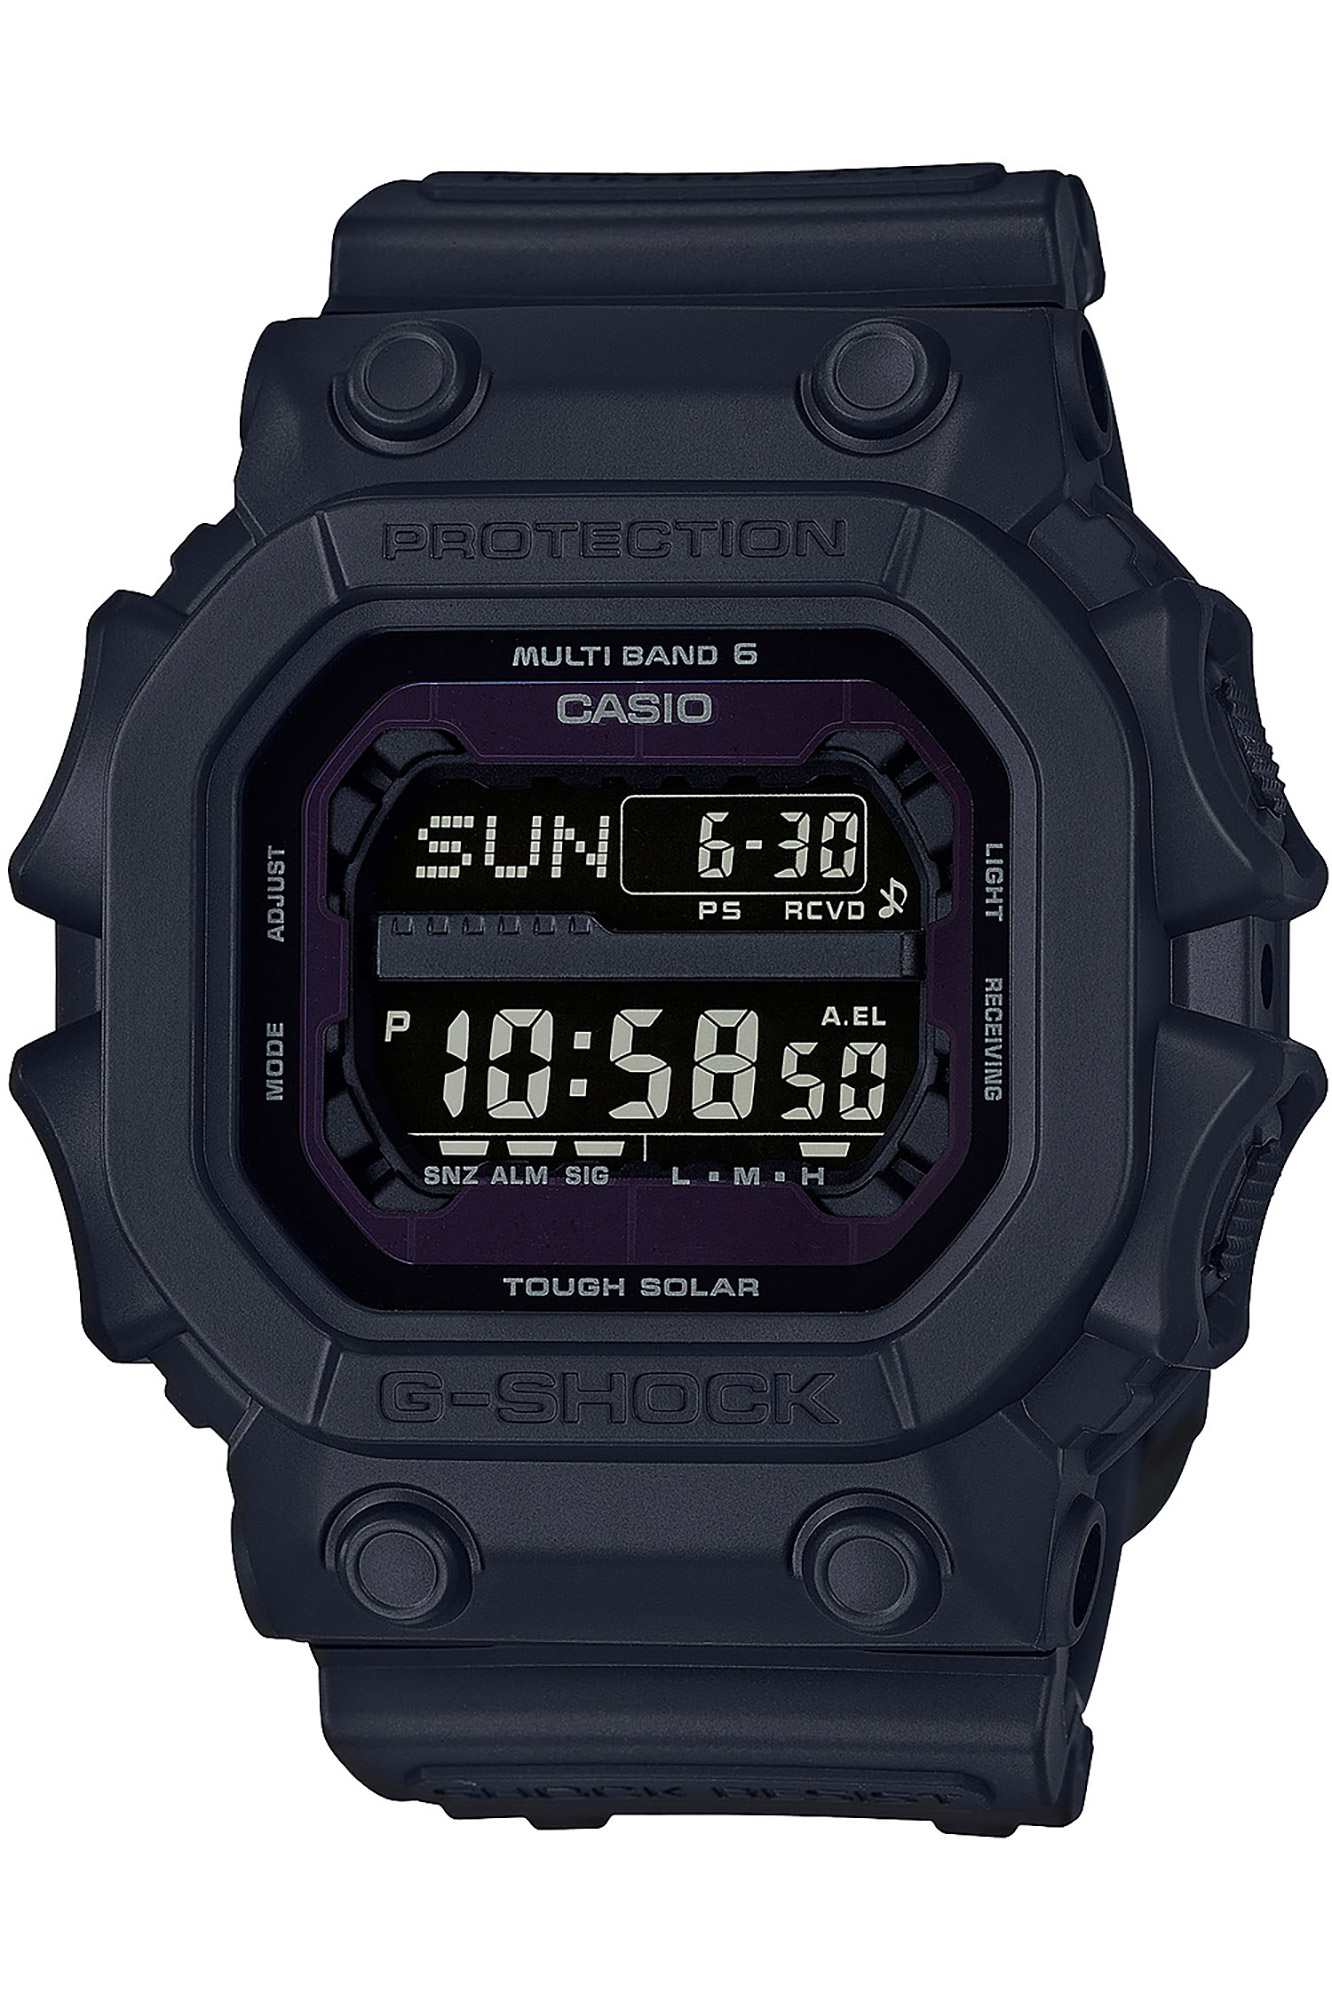 Reloj CASIO G-Shock gxw-56bb-1er